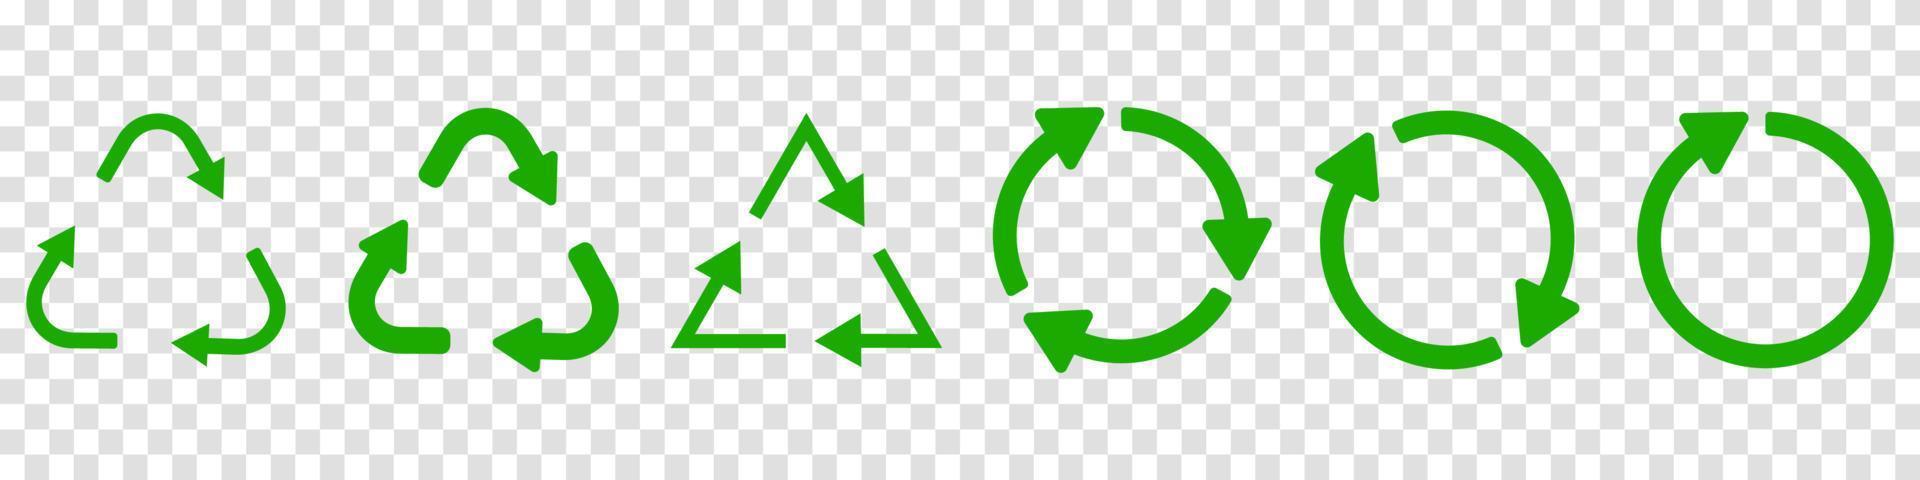 recyceln Sie grüne Vektorsymbole. Recycling-Symbol. Vektor-Illustration vektor